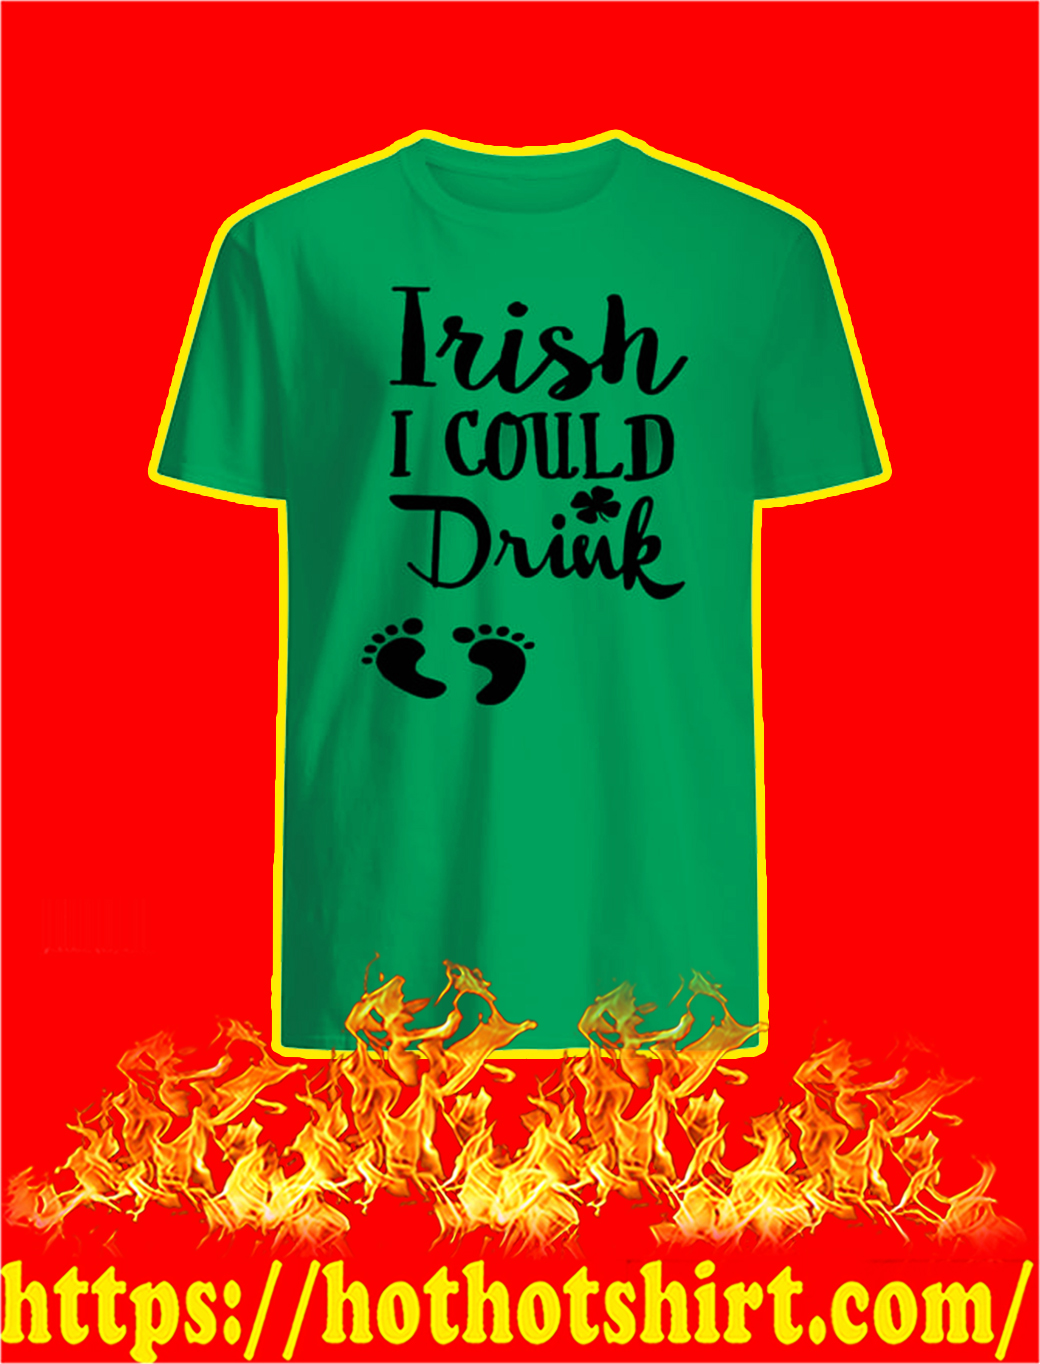 Irish I Could Drink shirt, sweatshirt, v-neck